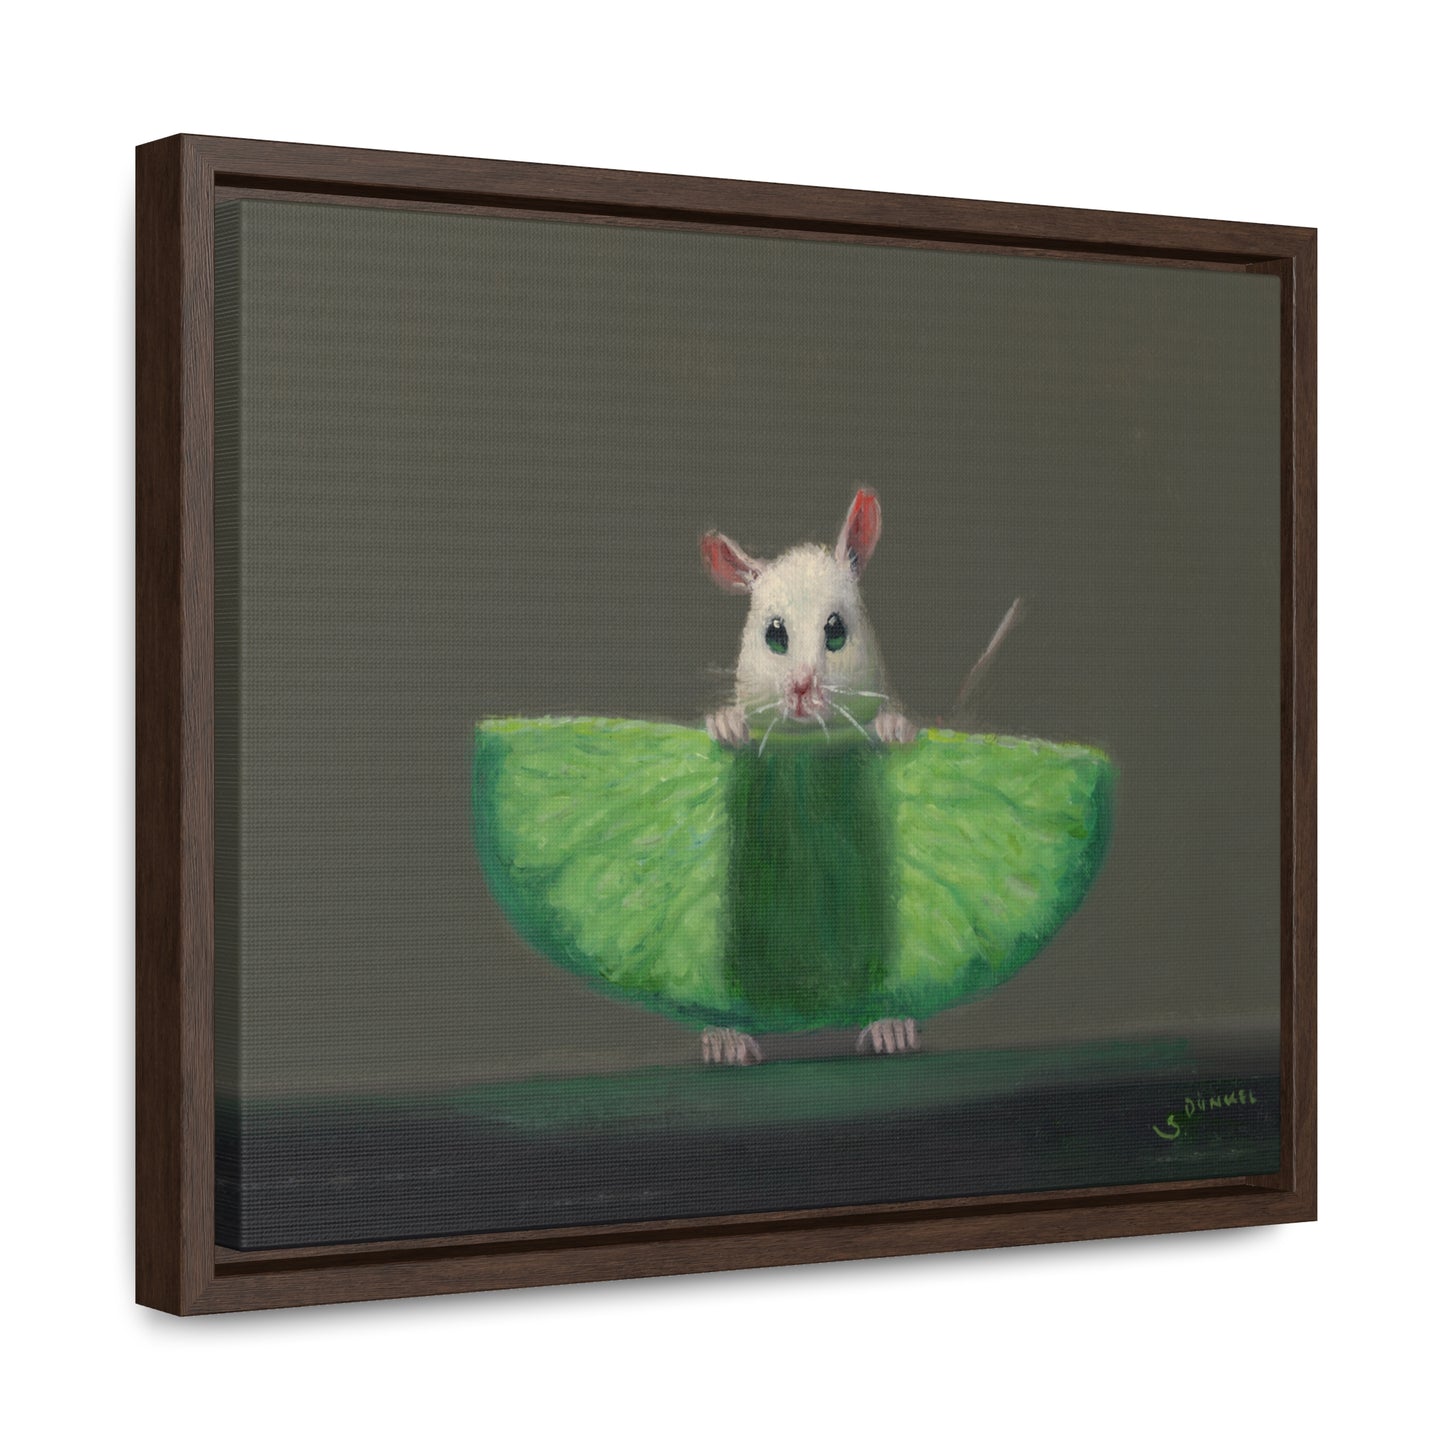 Stuart Dunkel: "Lime Xray" - Framed Canvas Reproduction